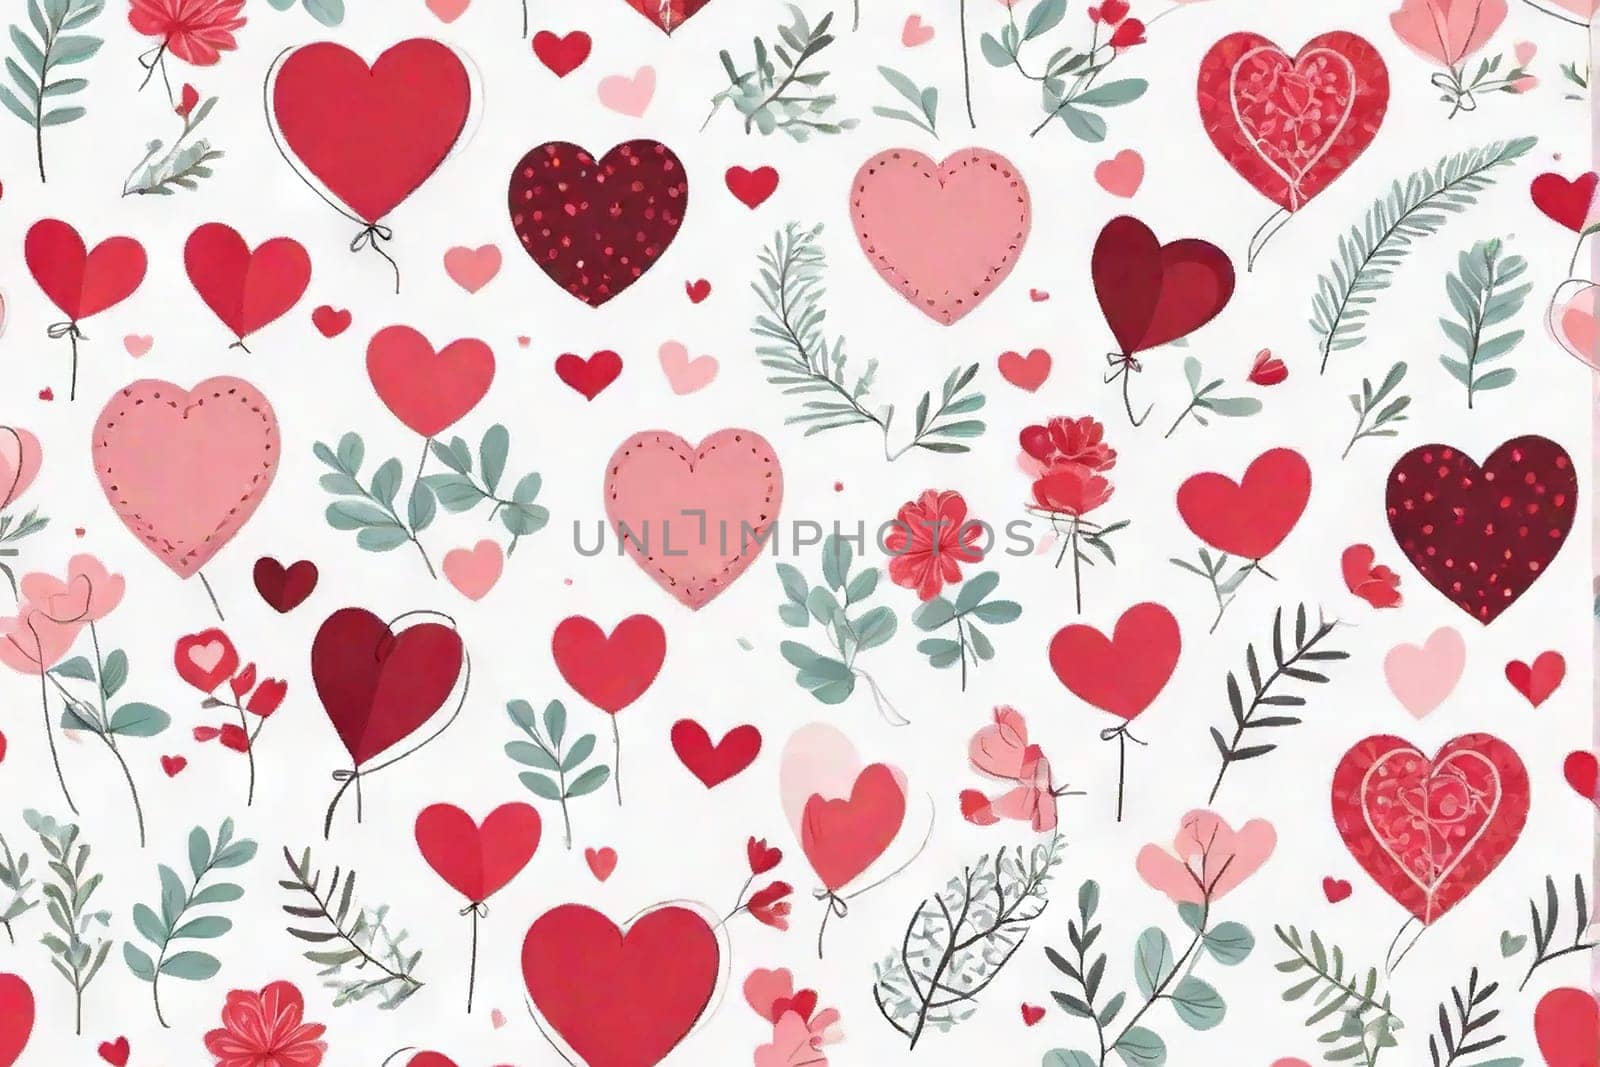 Heart doodle for Valentine's Day. Sketch red heart symbol graphic set. by EkaterinaPereslavtseva